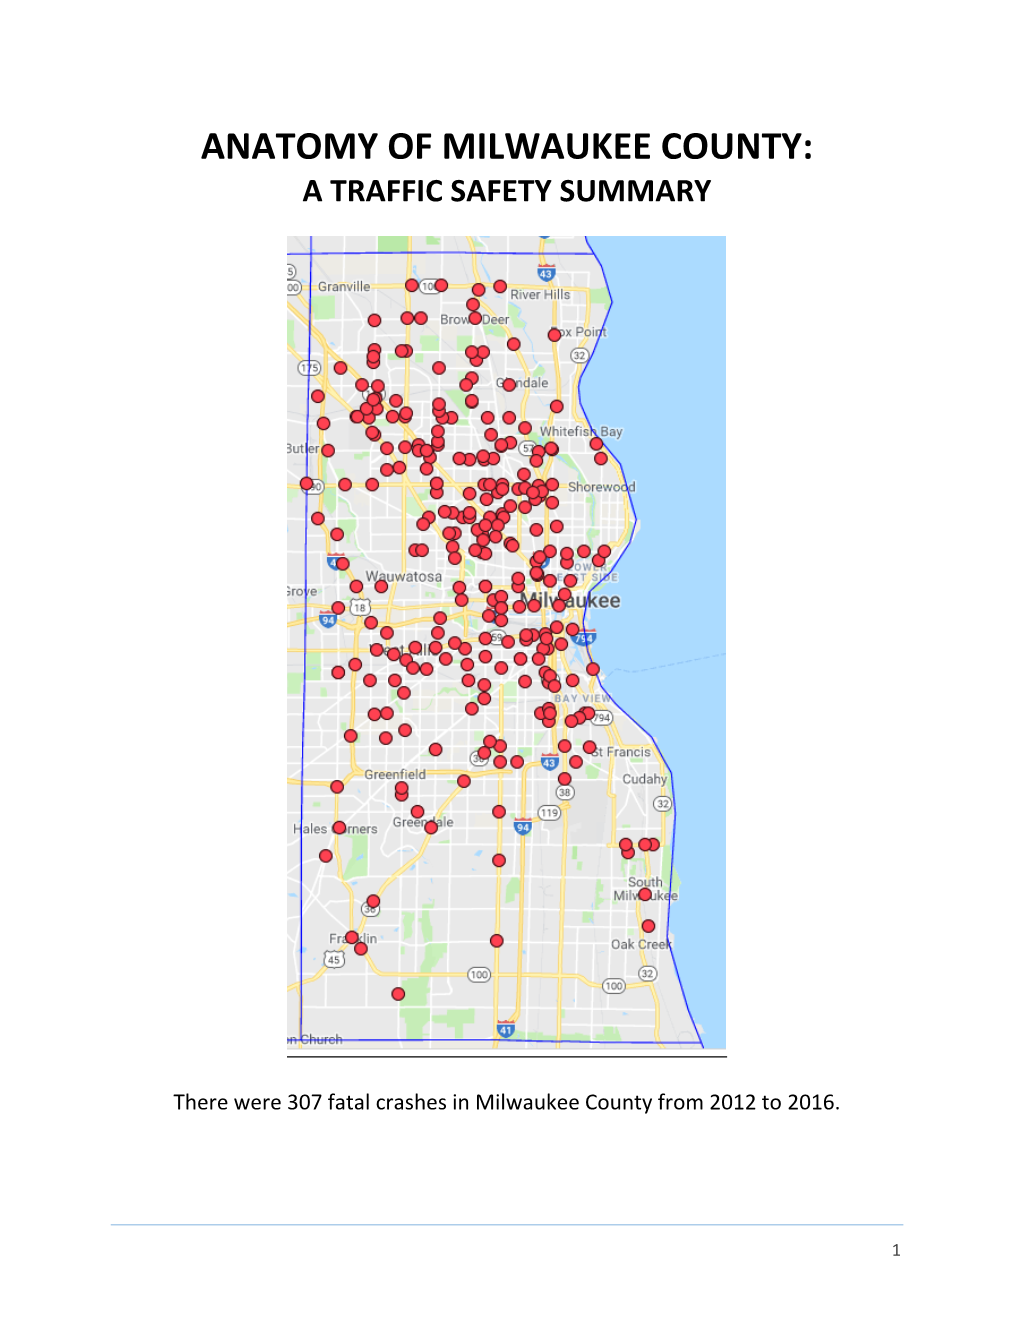 Anatomy of Milwaukee County: a Traffic Safety Summary